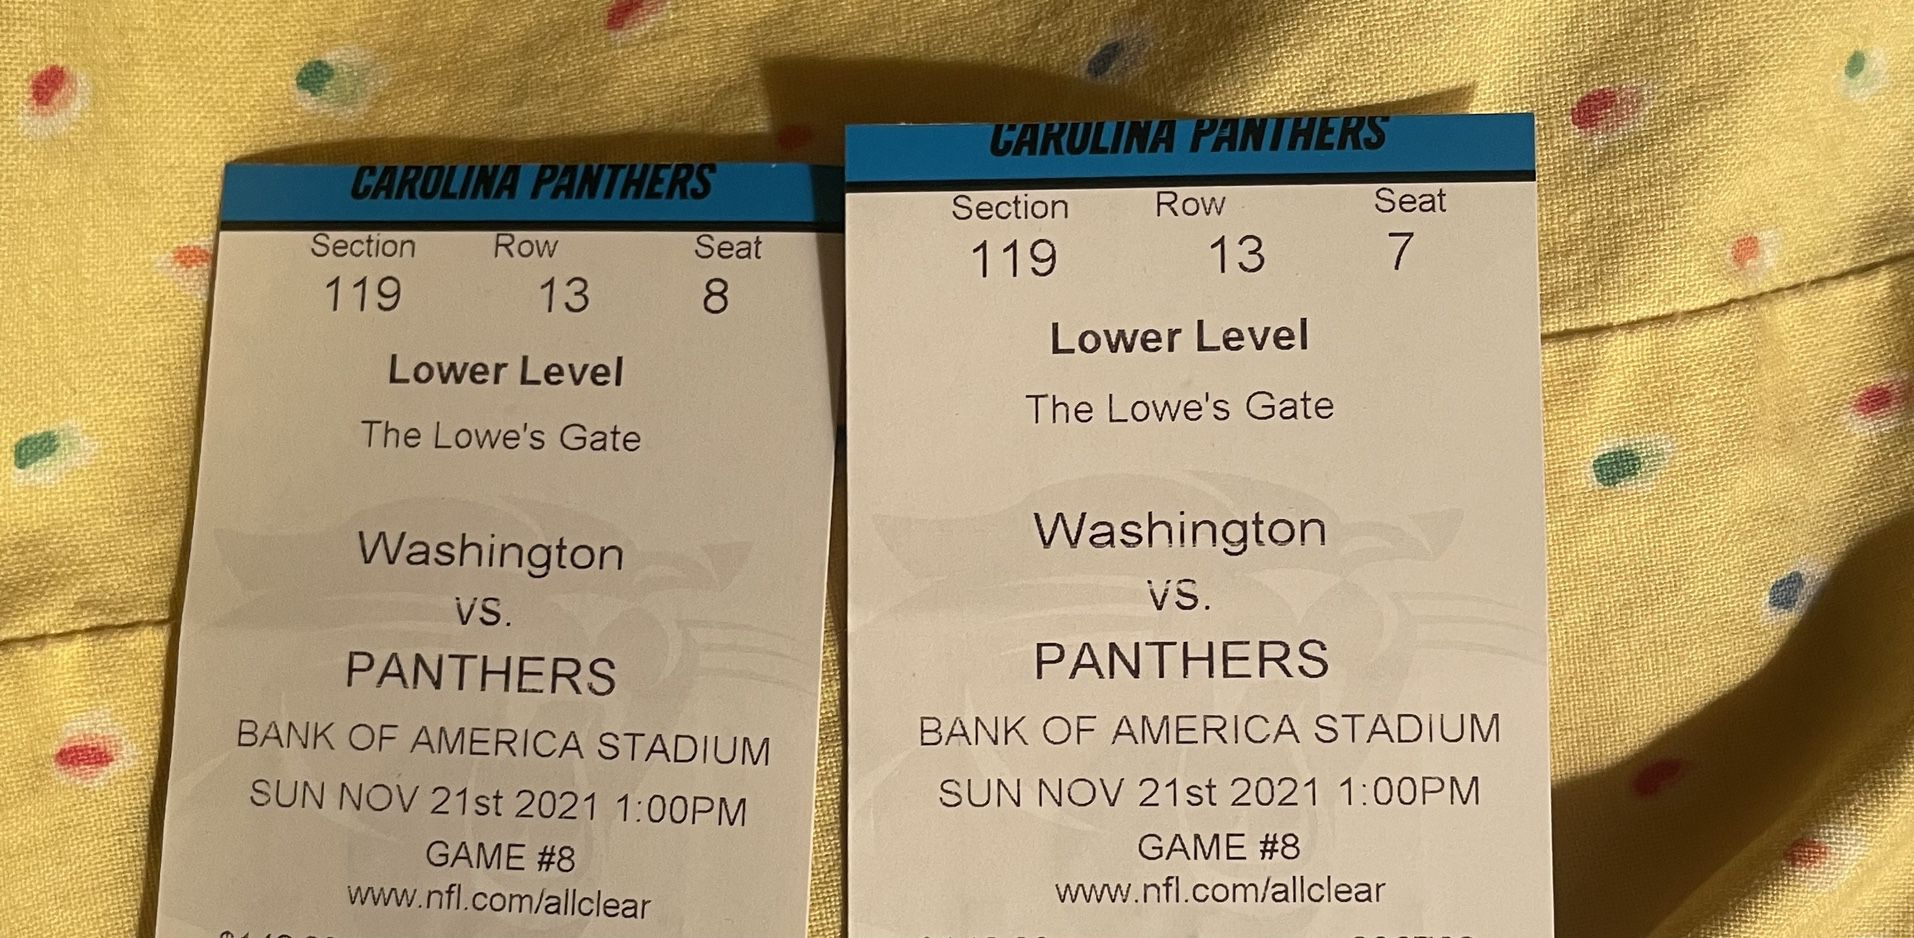 Carolina Panthers vs. Washington Football Team